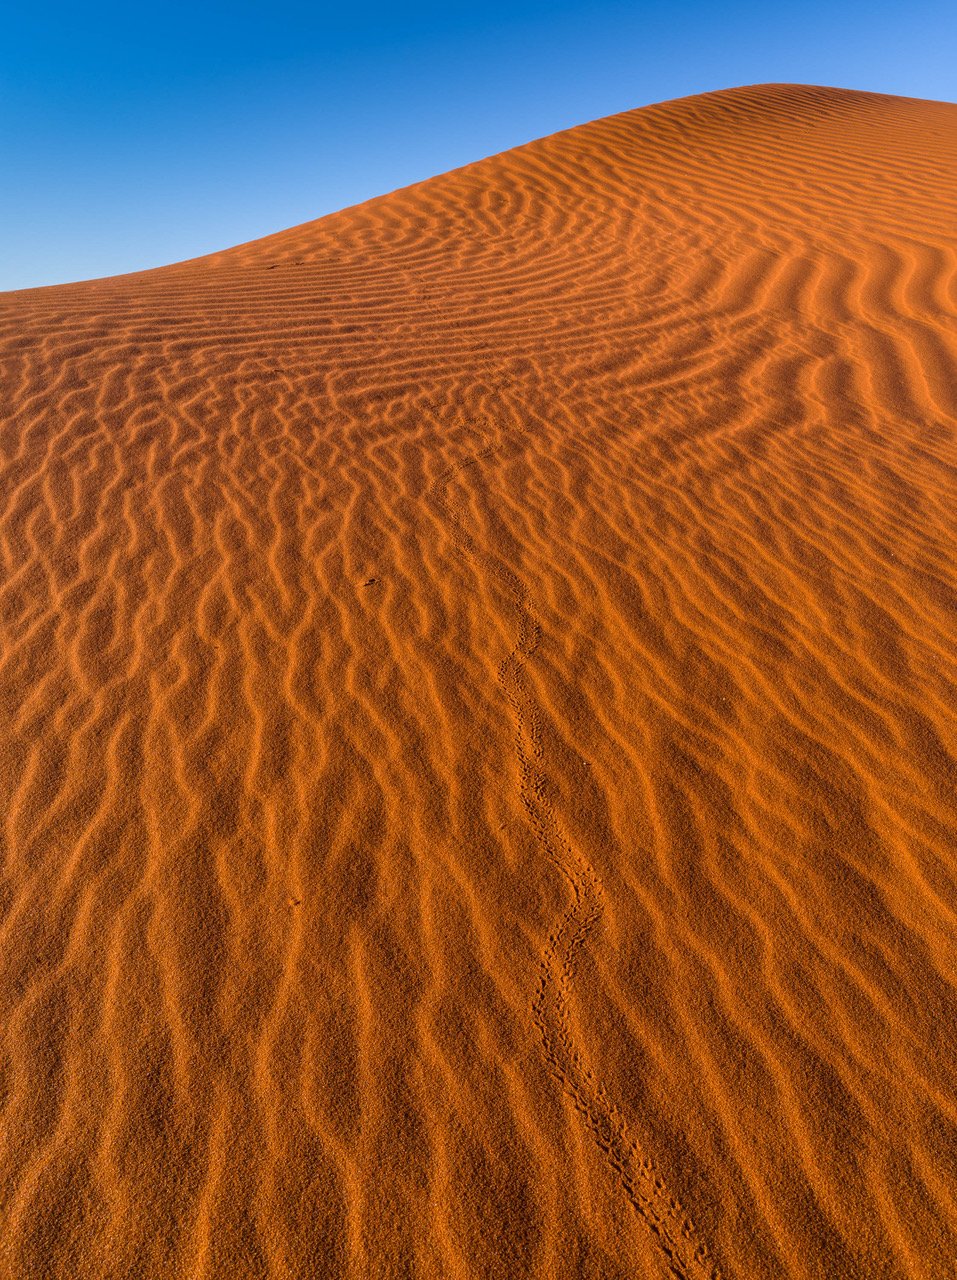 Curvy marks on the desert sand, Namibia #26, Africa